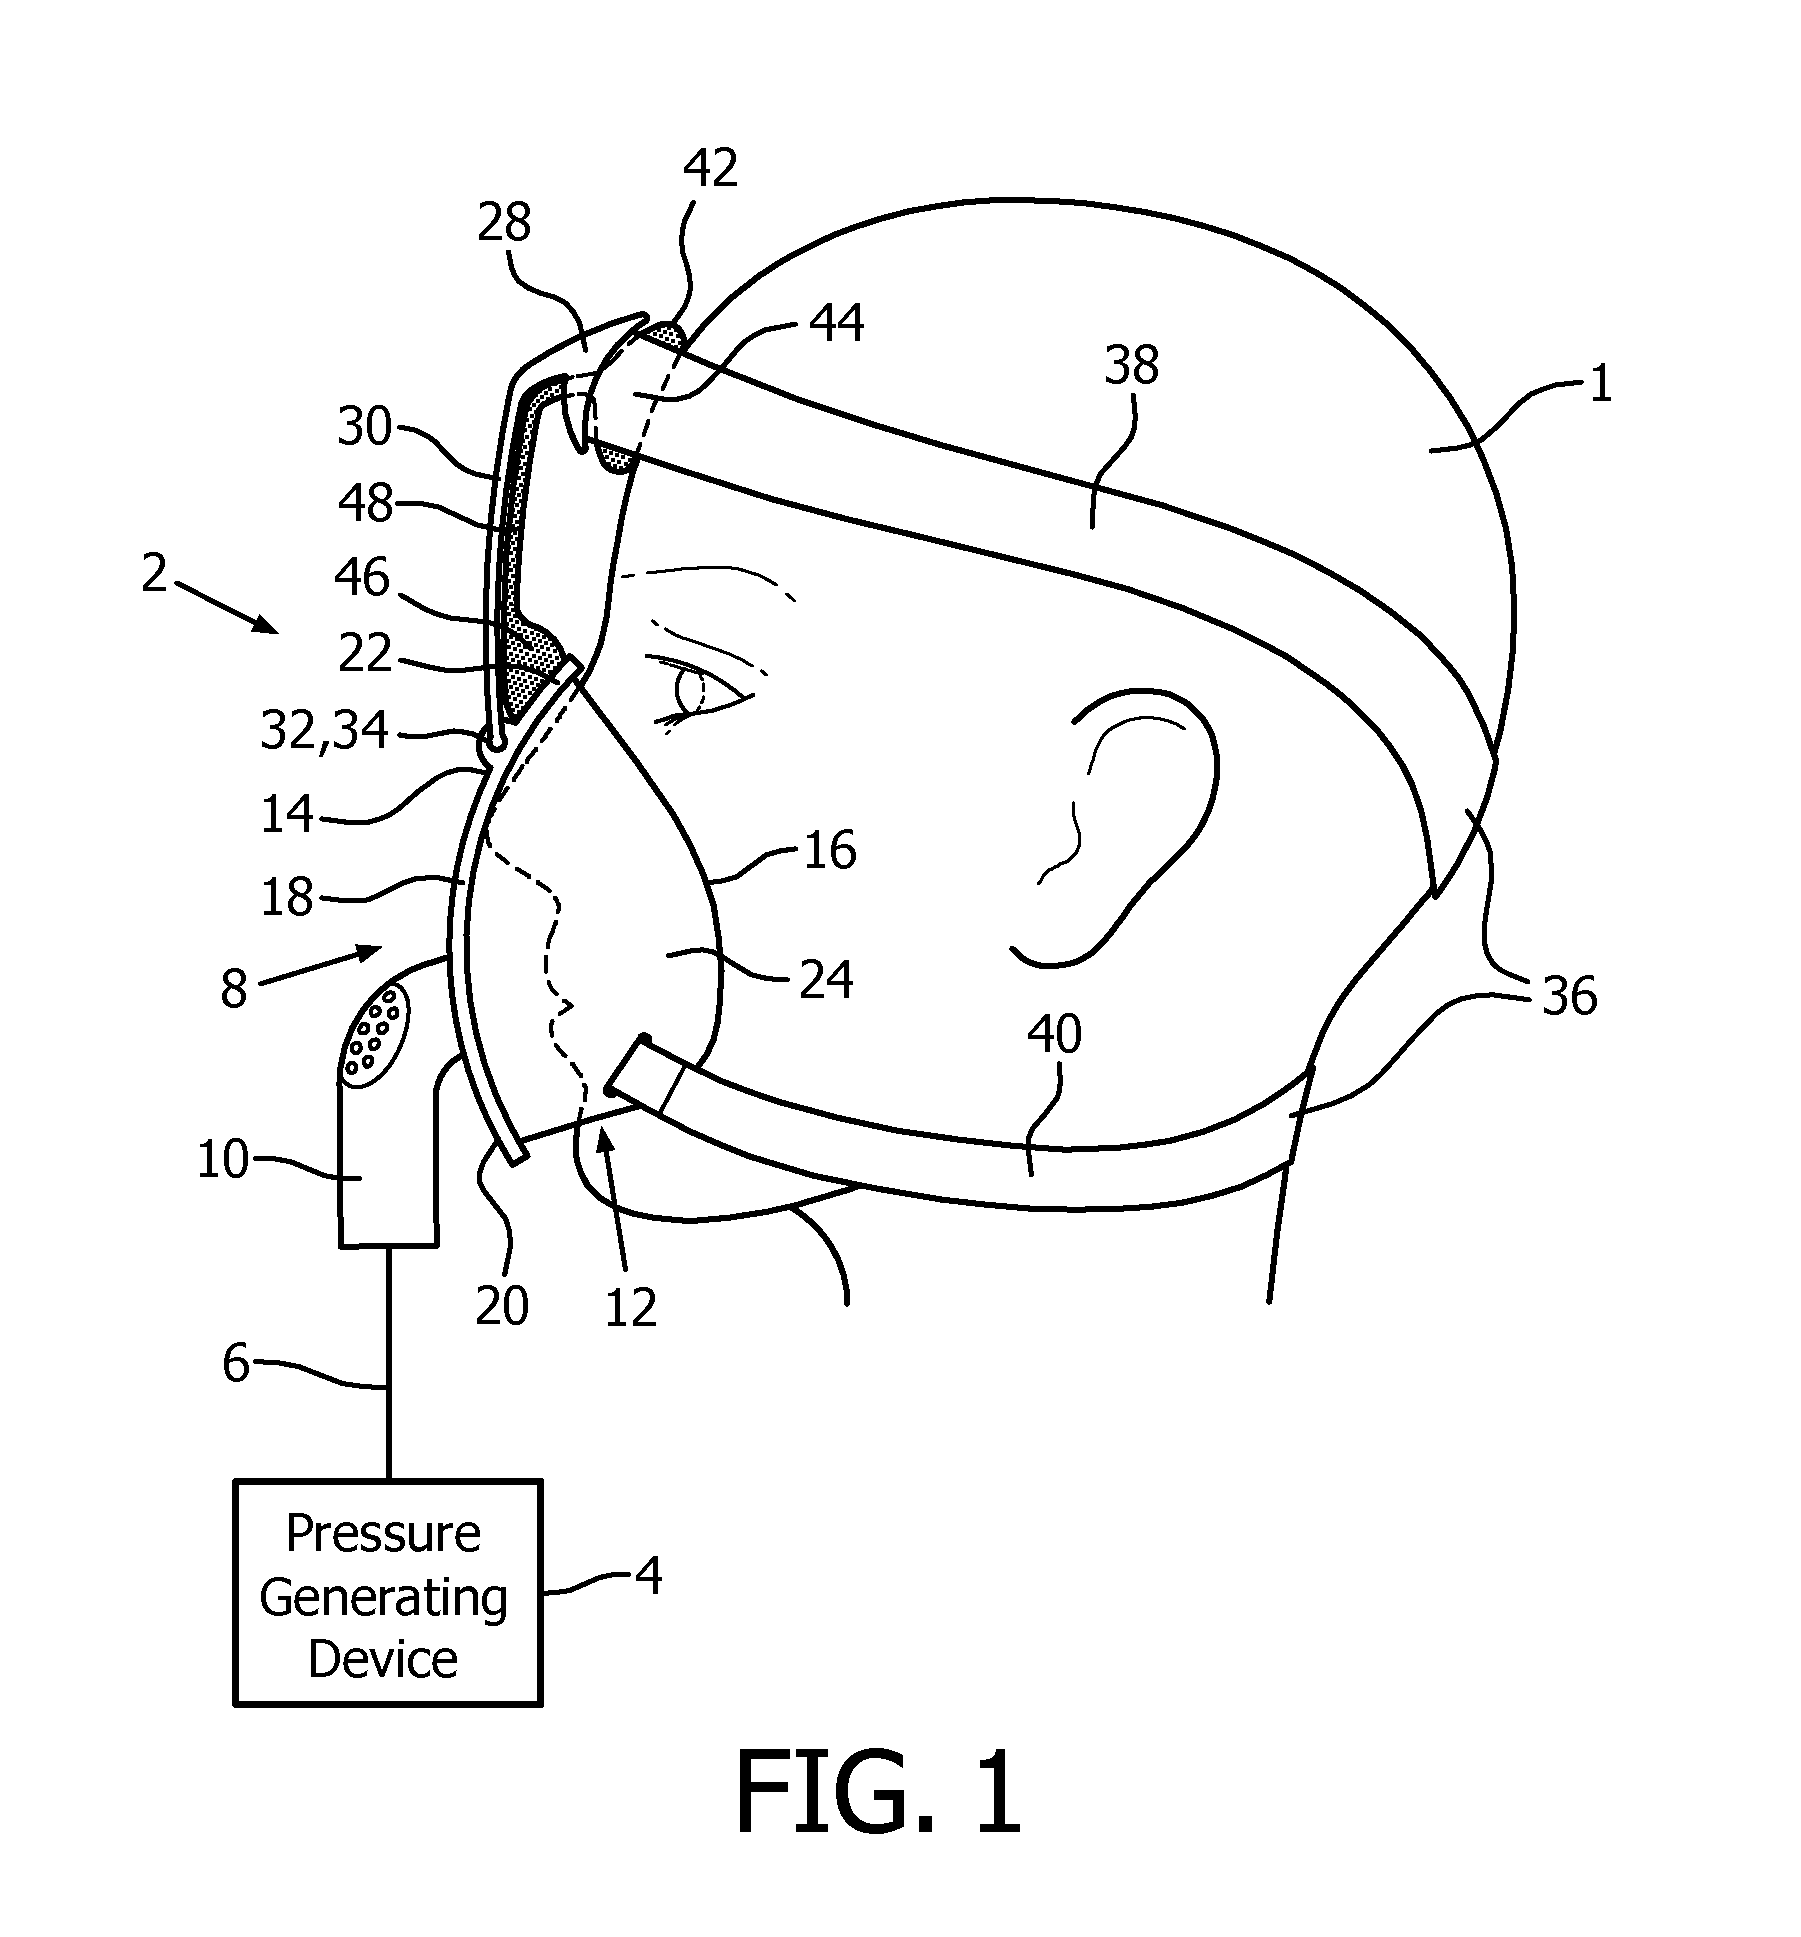 Patient interface device with nose bridge adjustment